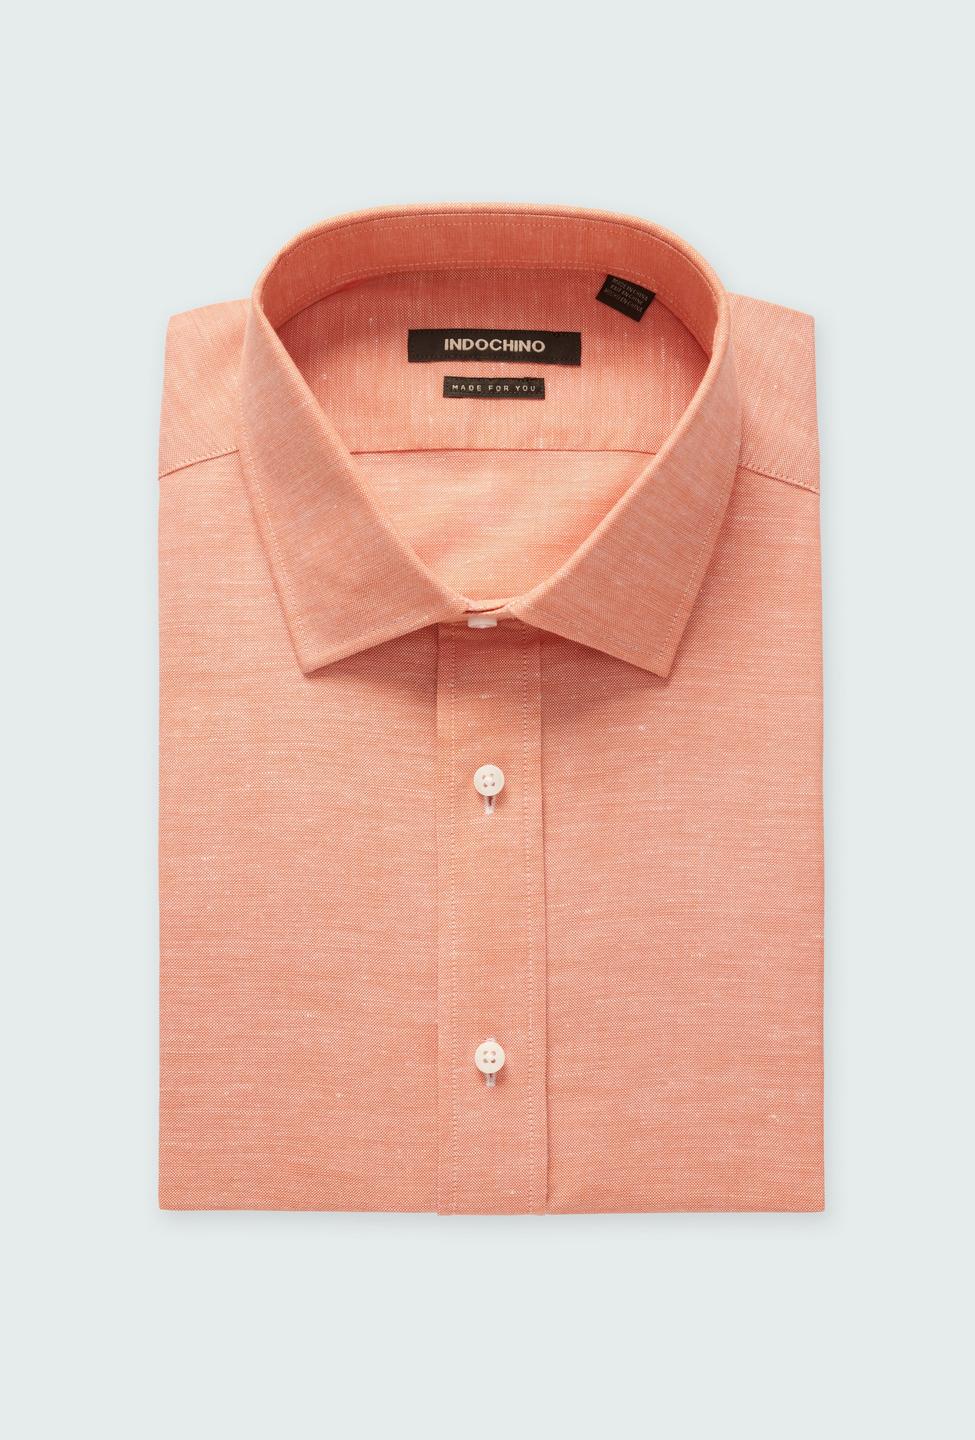 Sudbury Cotton Linen Apricot Shirt